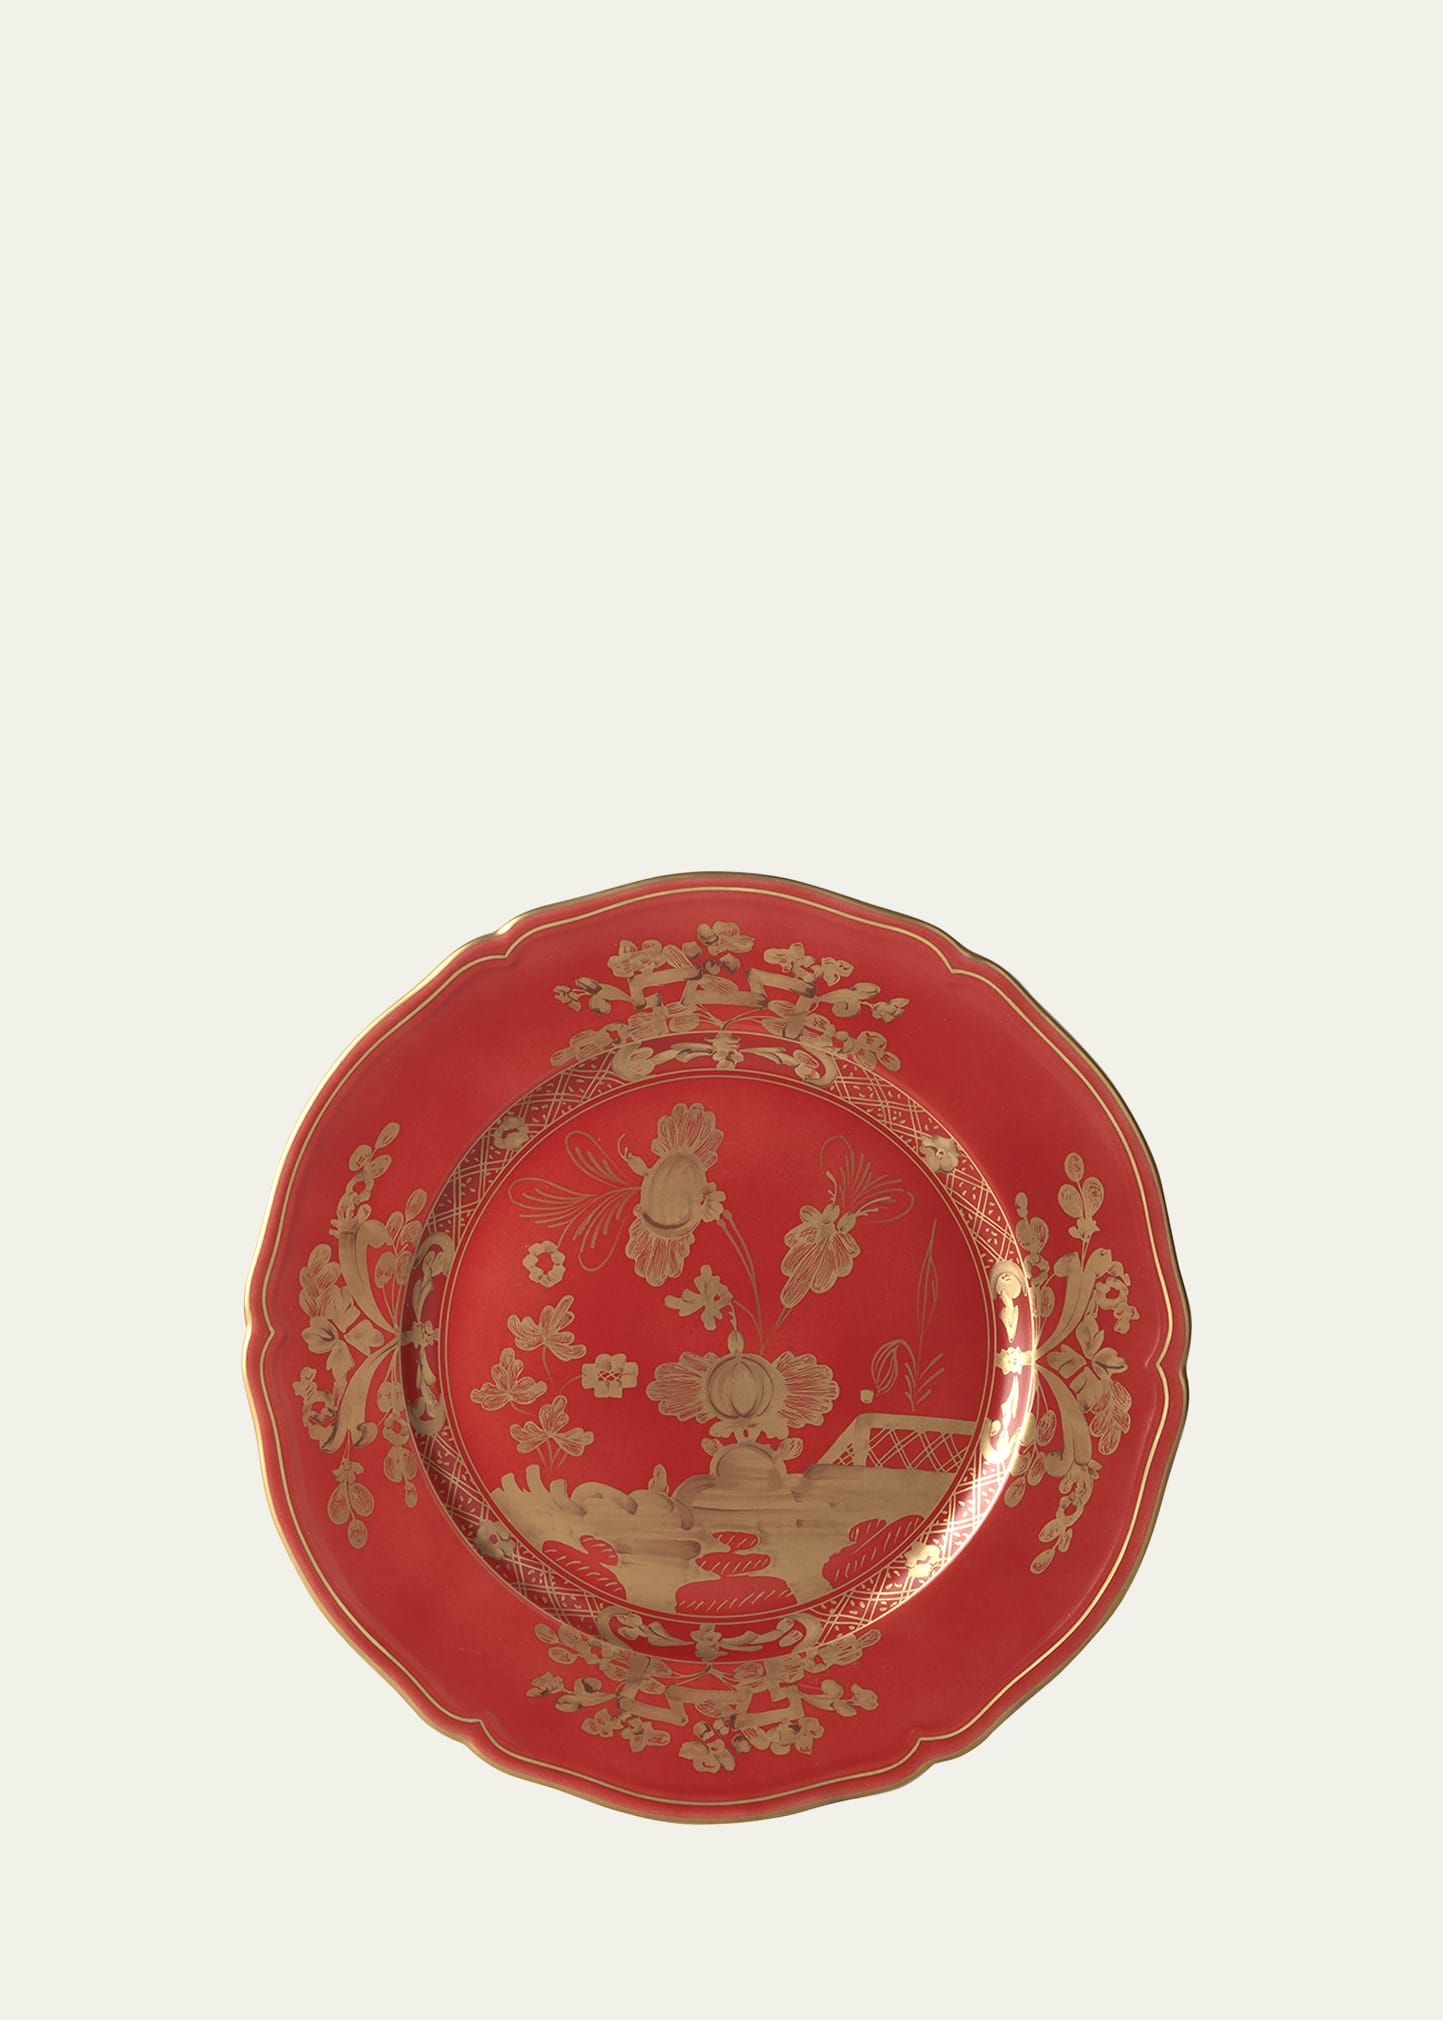 Ginori 1735 Oriente Italiano Rubrum Charger Plate In Oirubrum